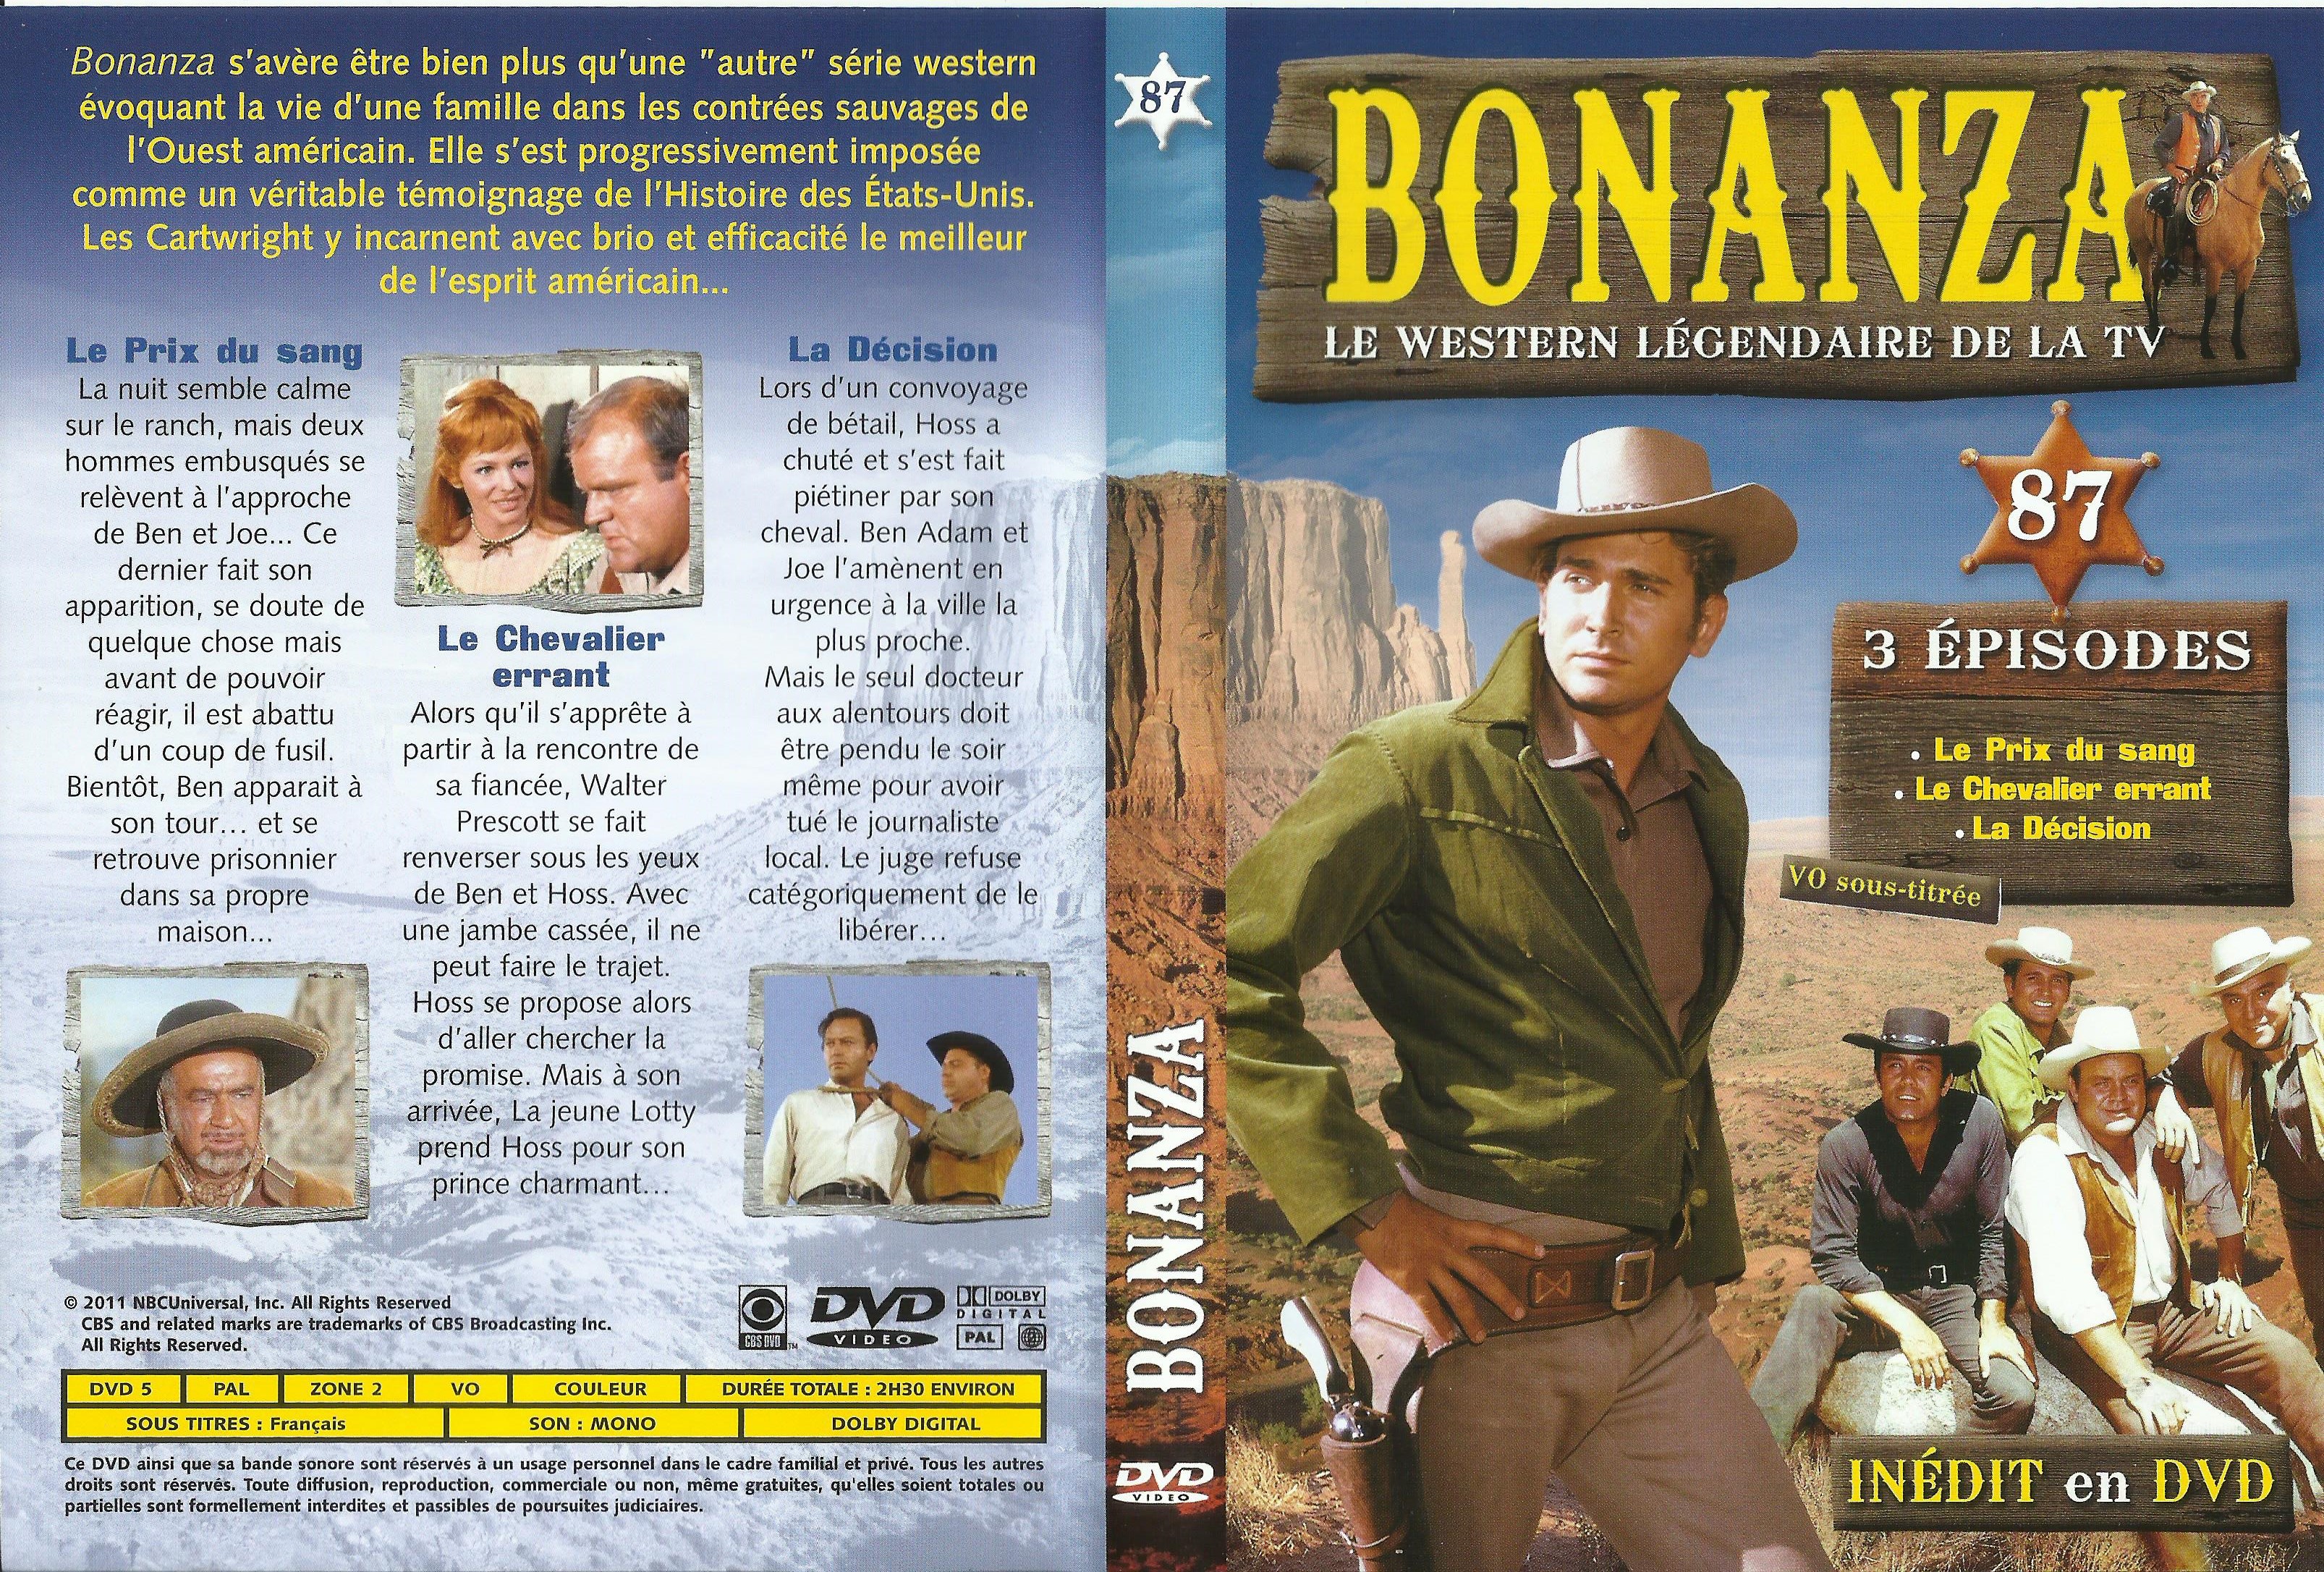 Jaquette DVD Bonanza vol 87